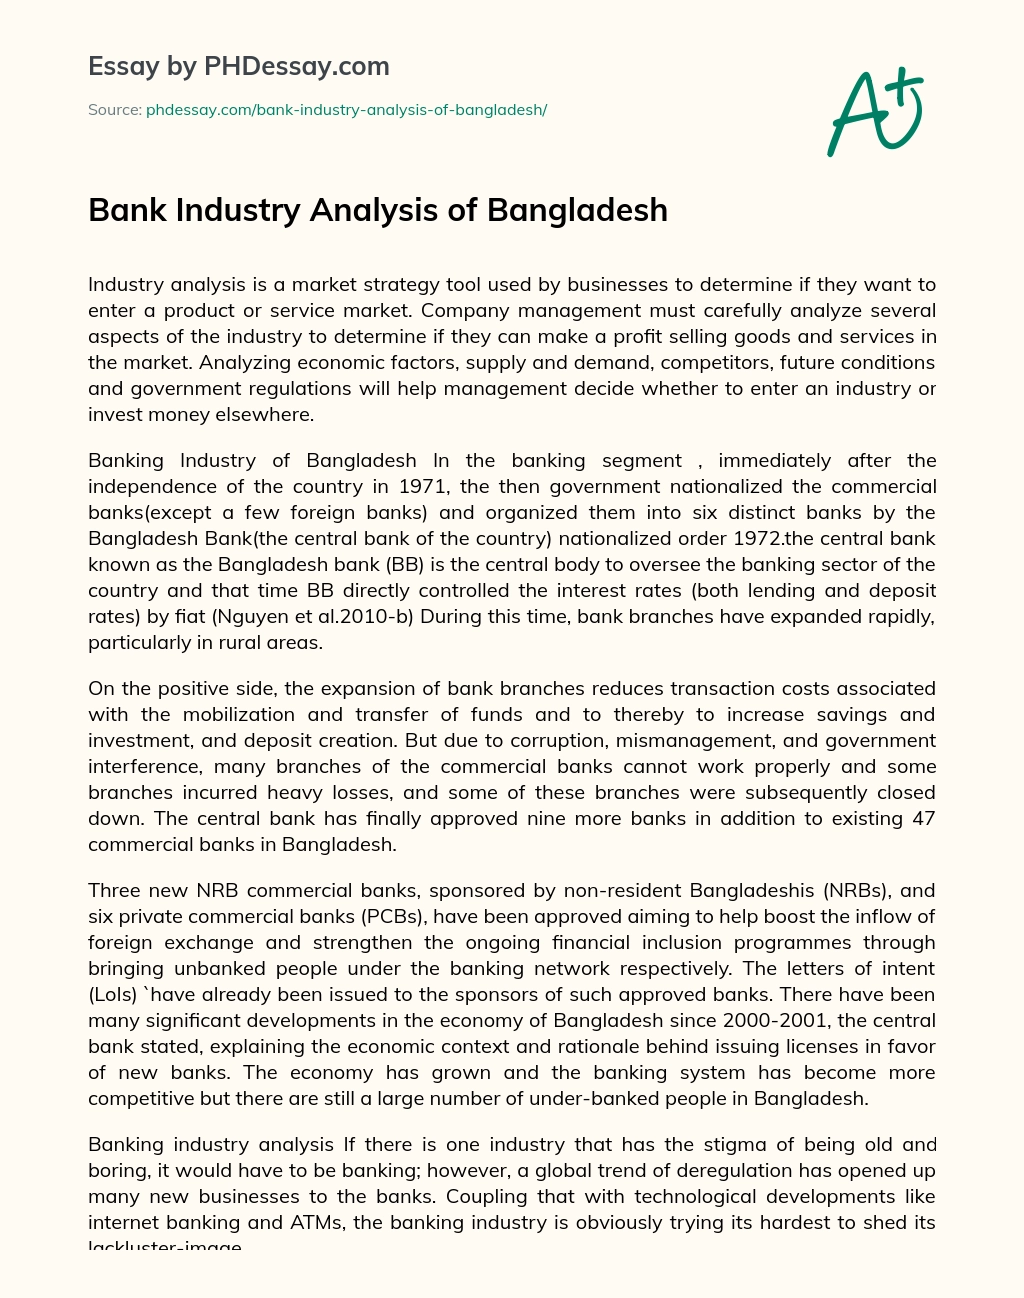 Bank Industry Analysis of Bangladesh essay